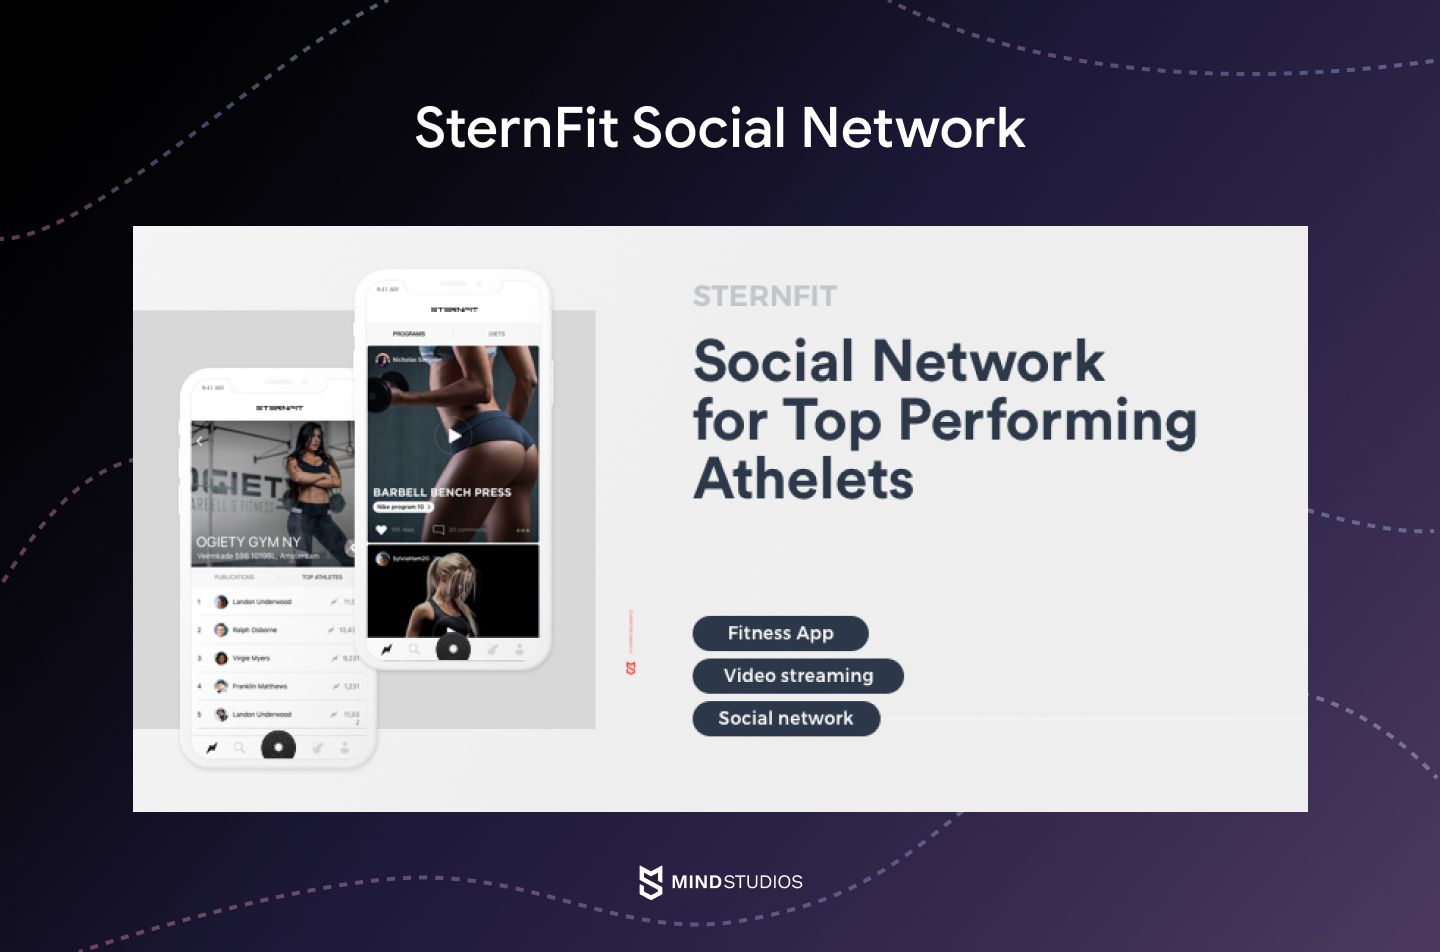 SternFit social network